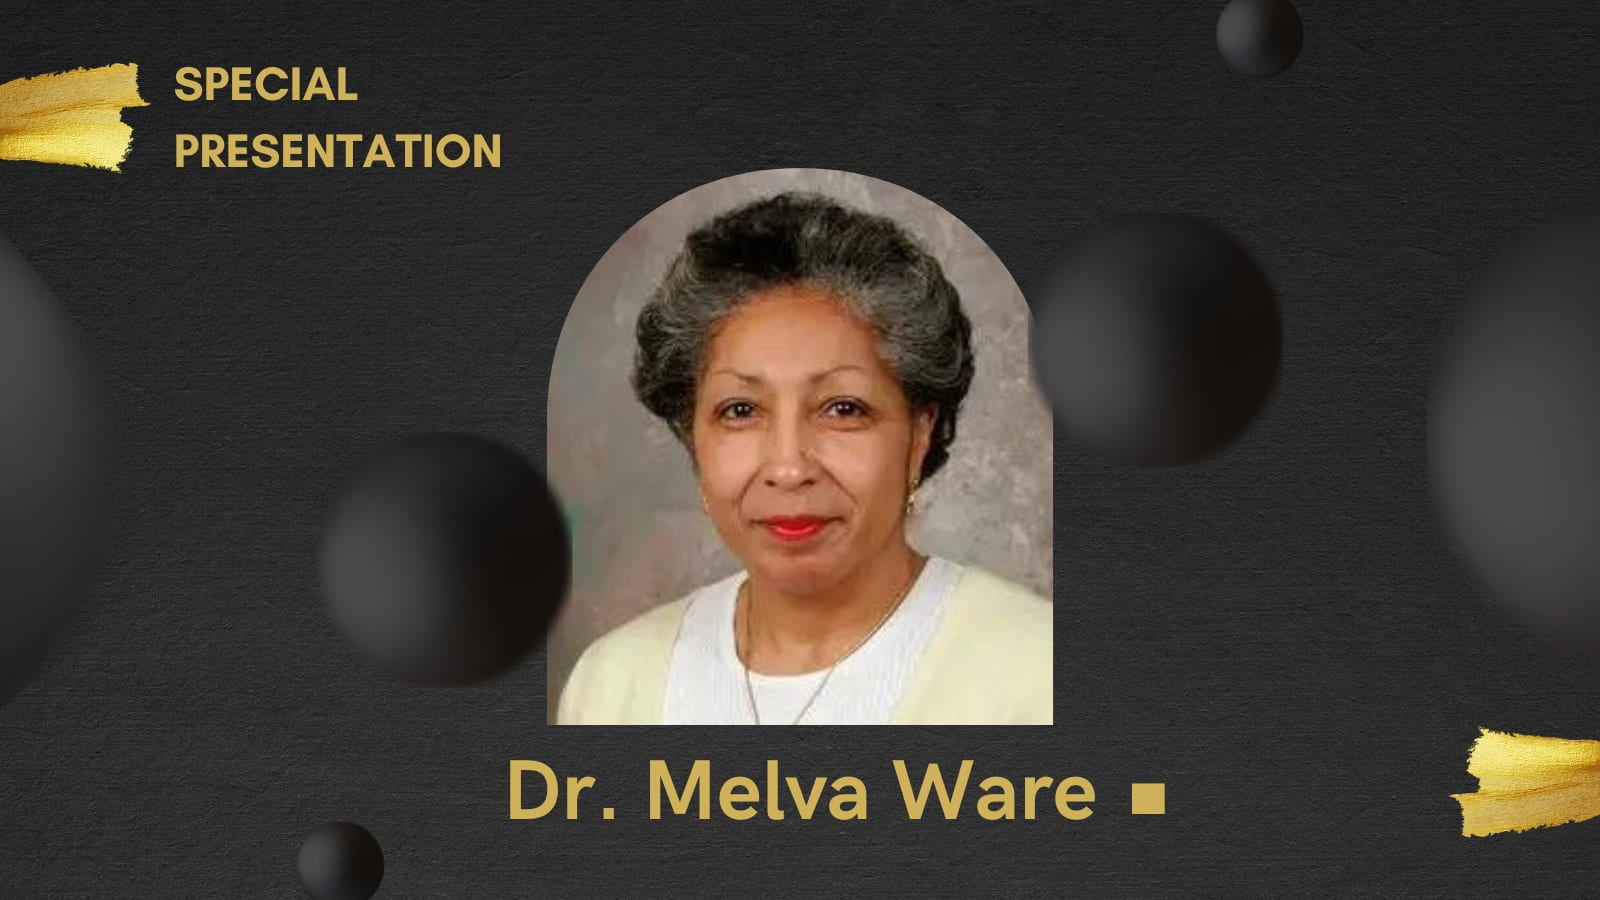 Dr. Melva Ware